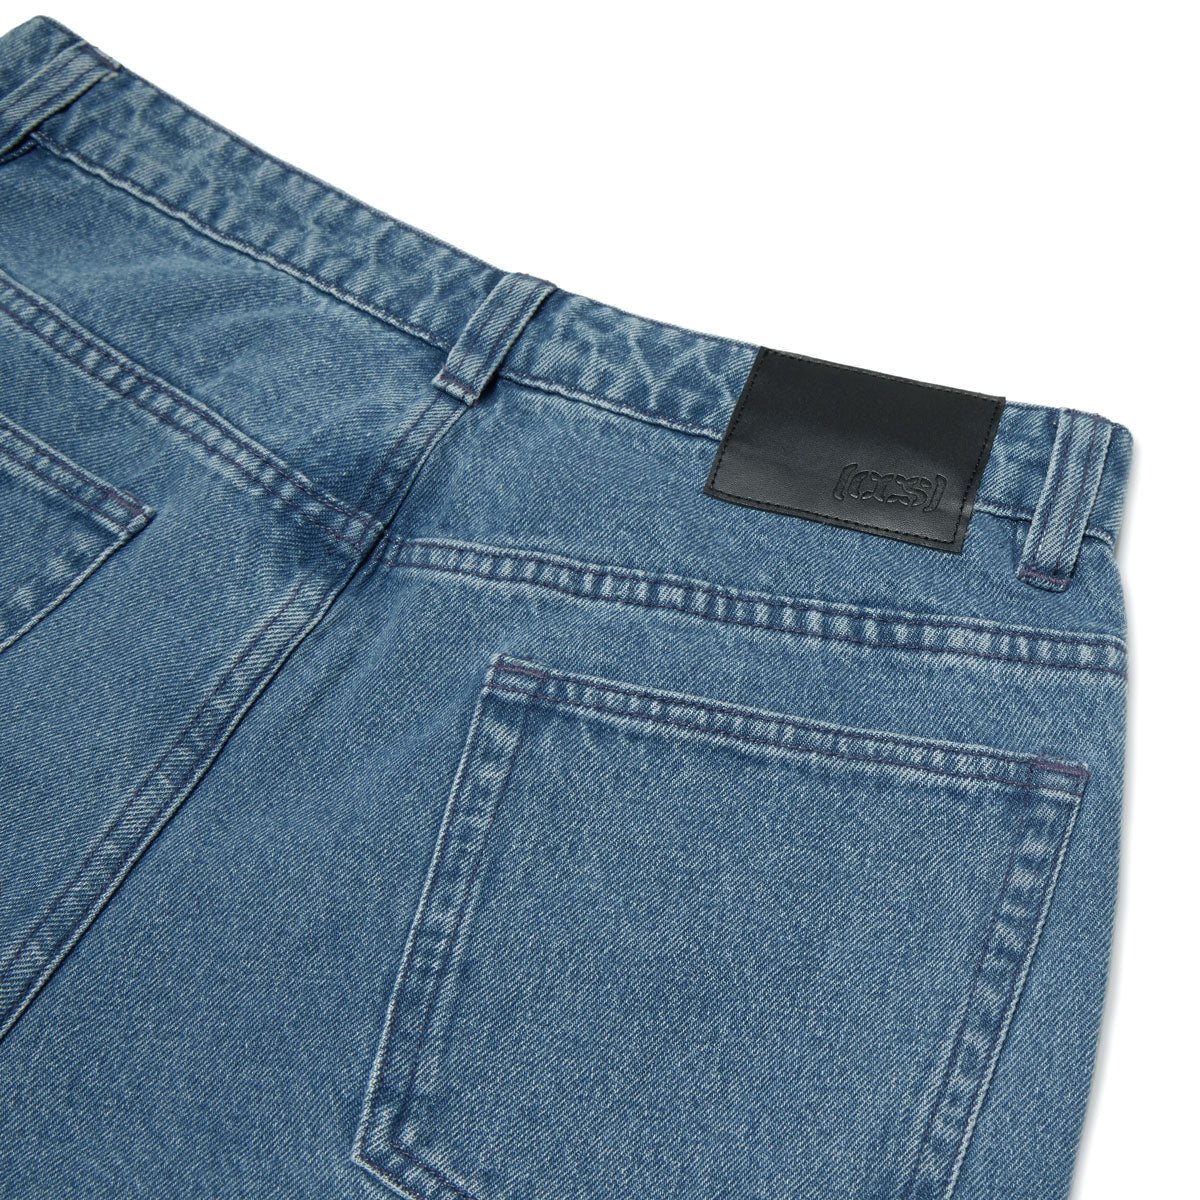 CCS Original Relaxed Taper Jeans - Medium Wash image 5